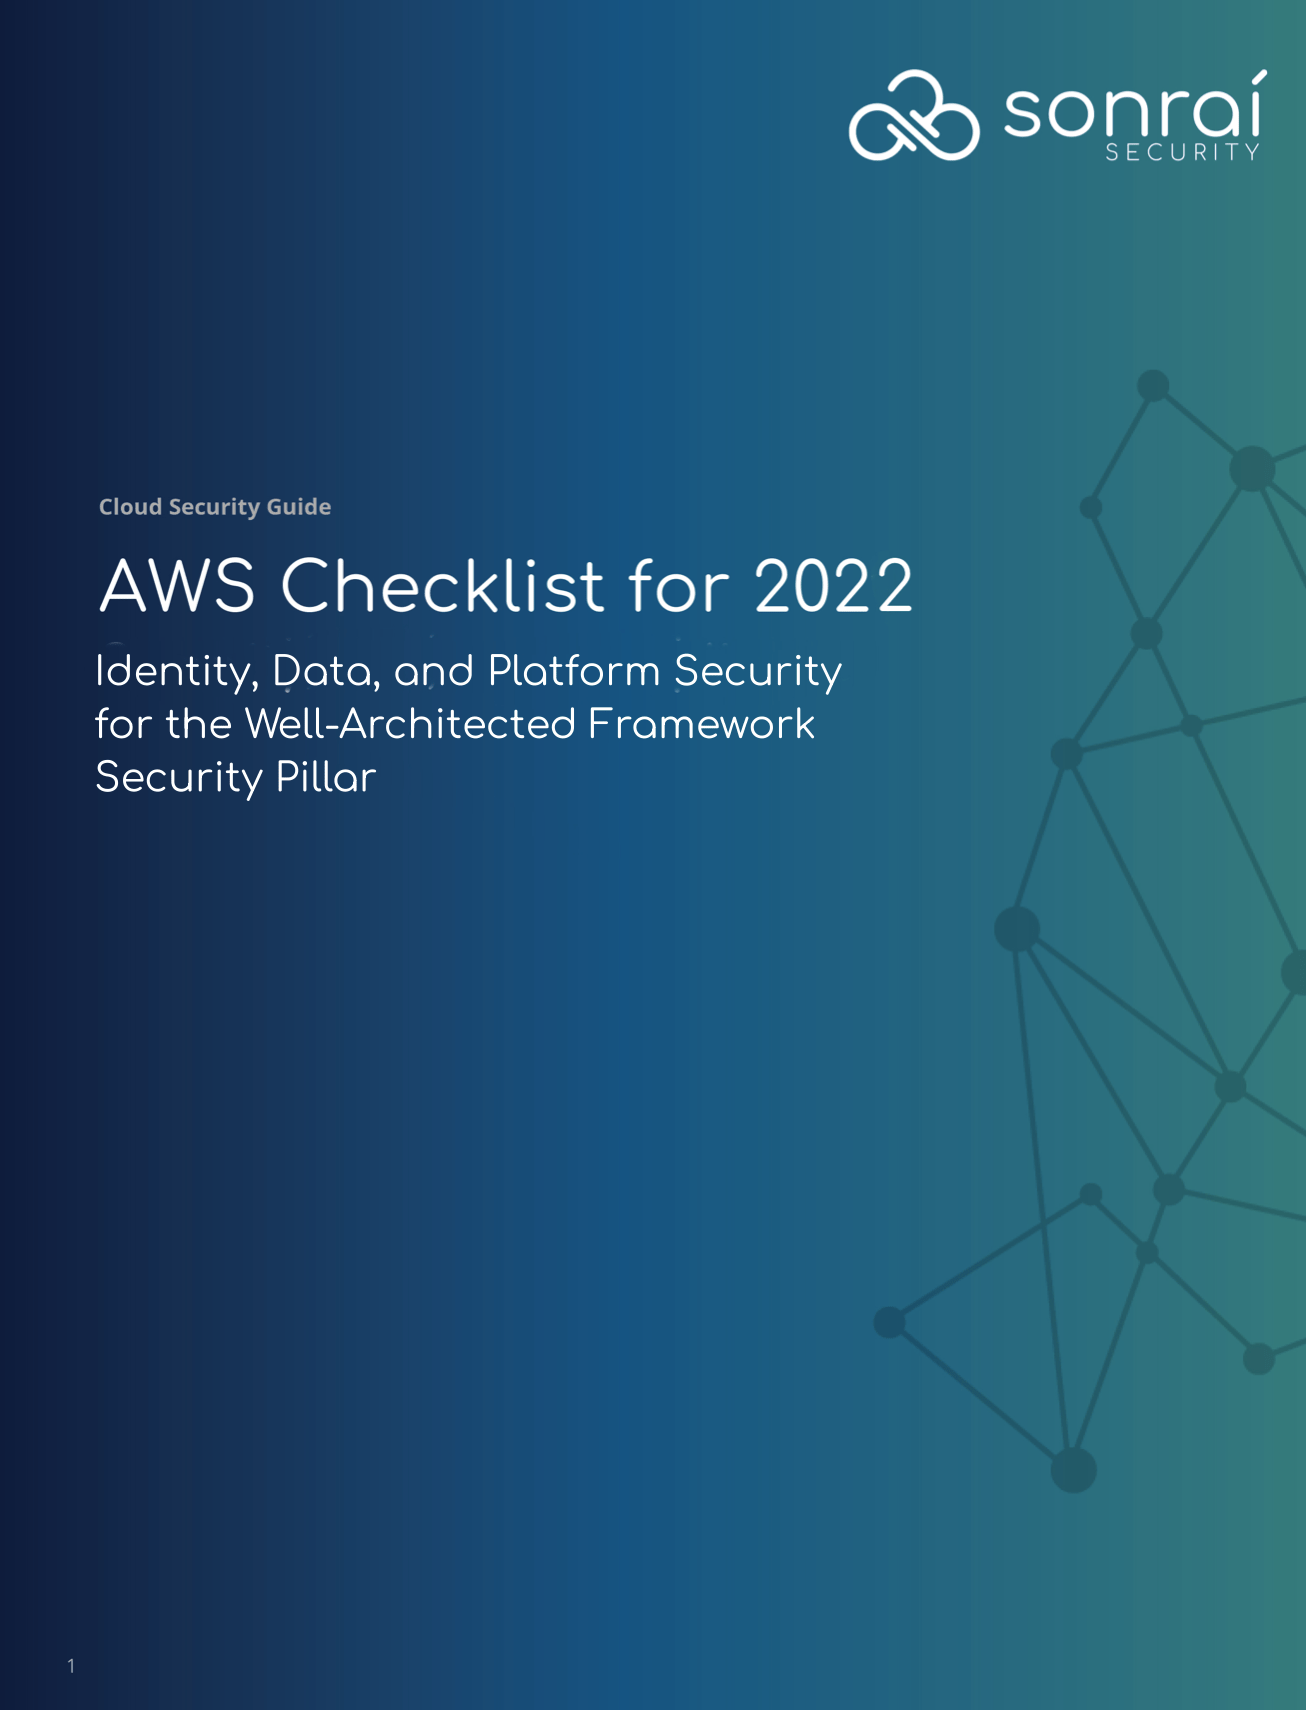 aws checklist cover - AWS Security Checklist for 2022